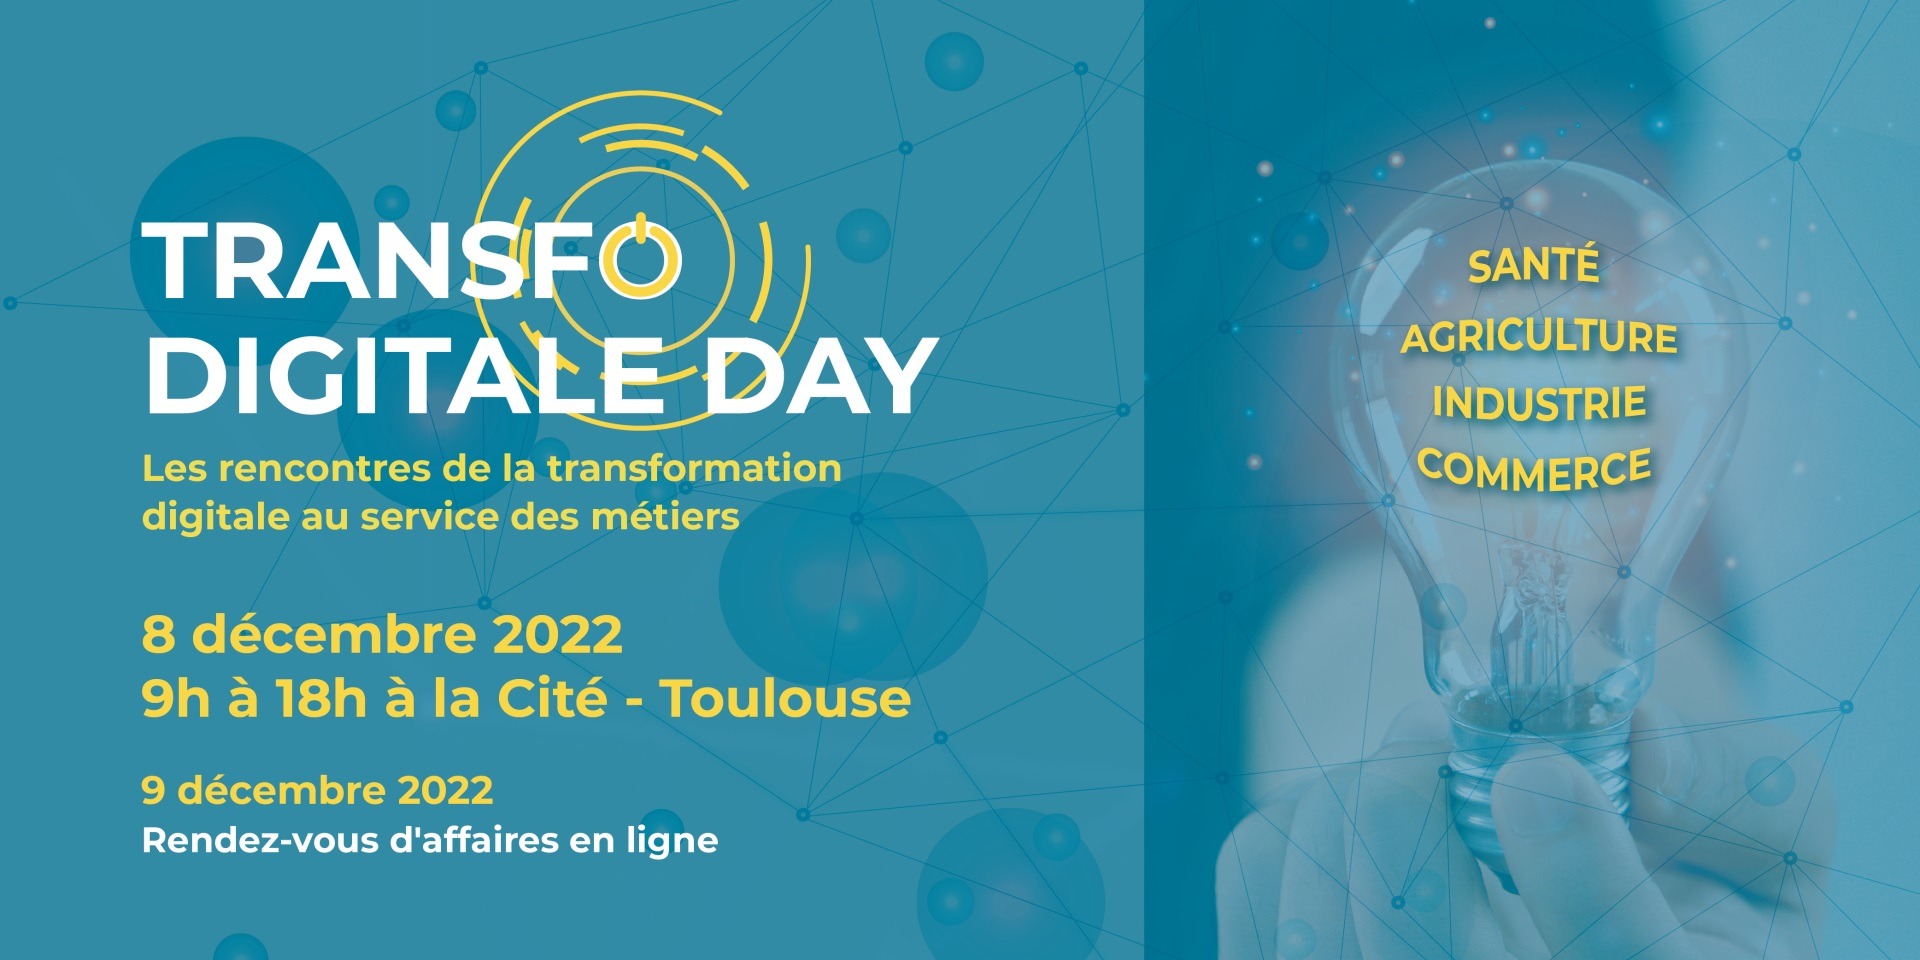 transformation digitale day 2022